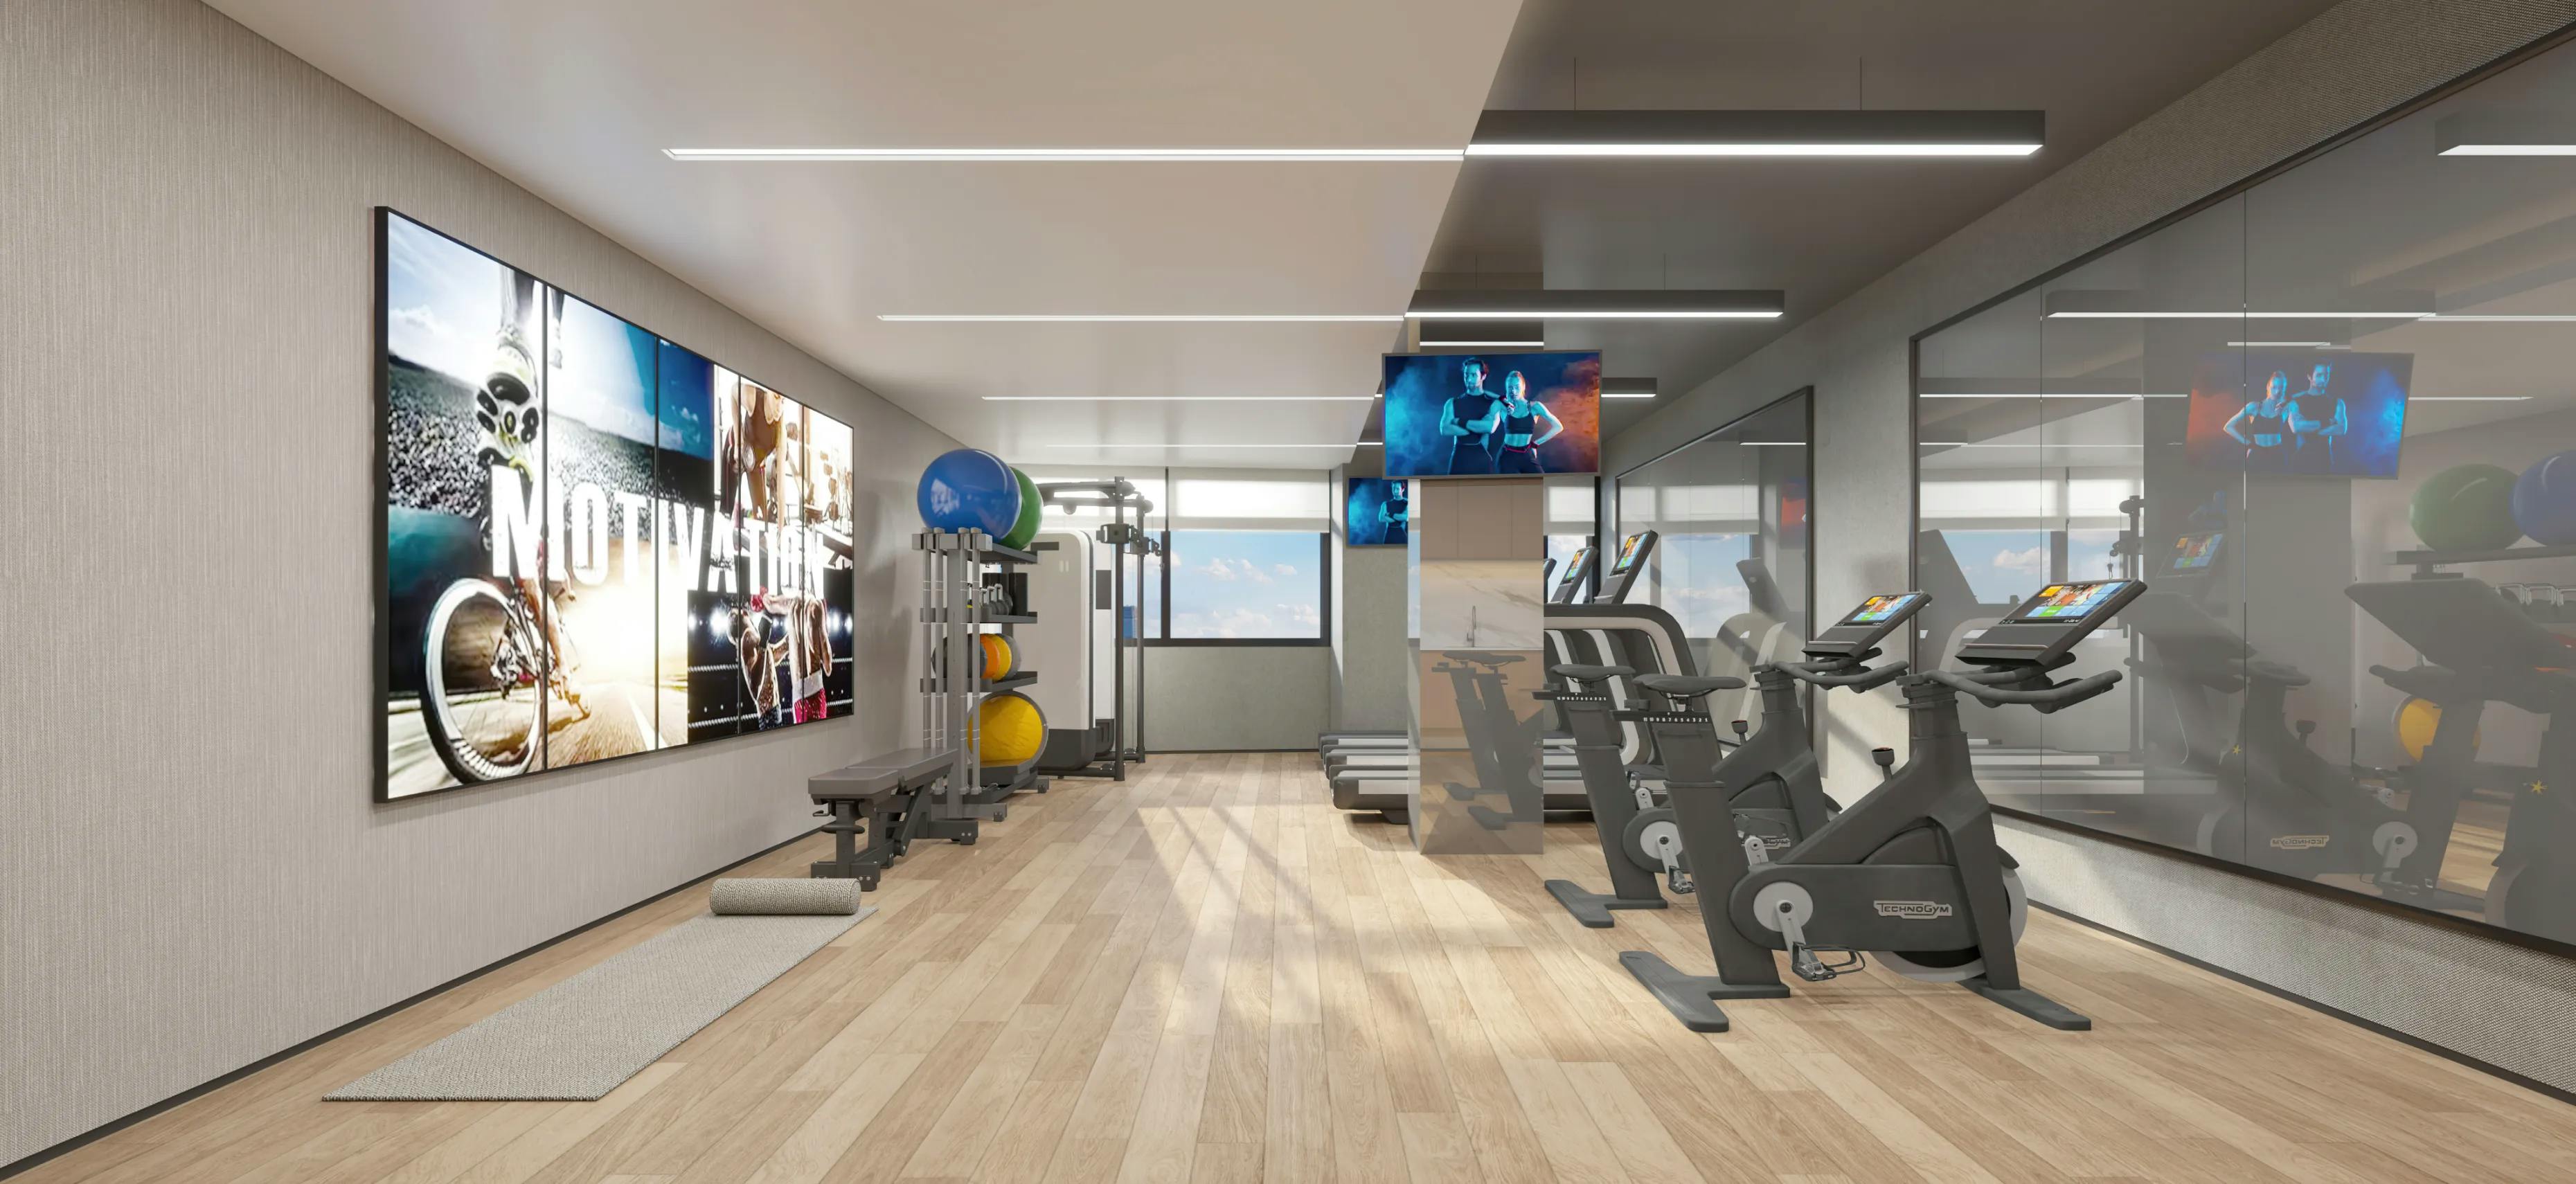 arcadiawoodside amenities fitness center (desktop)